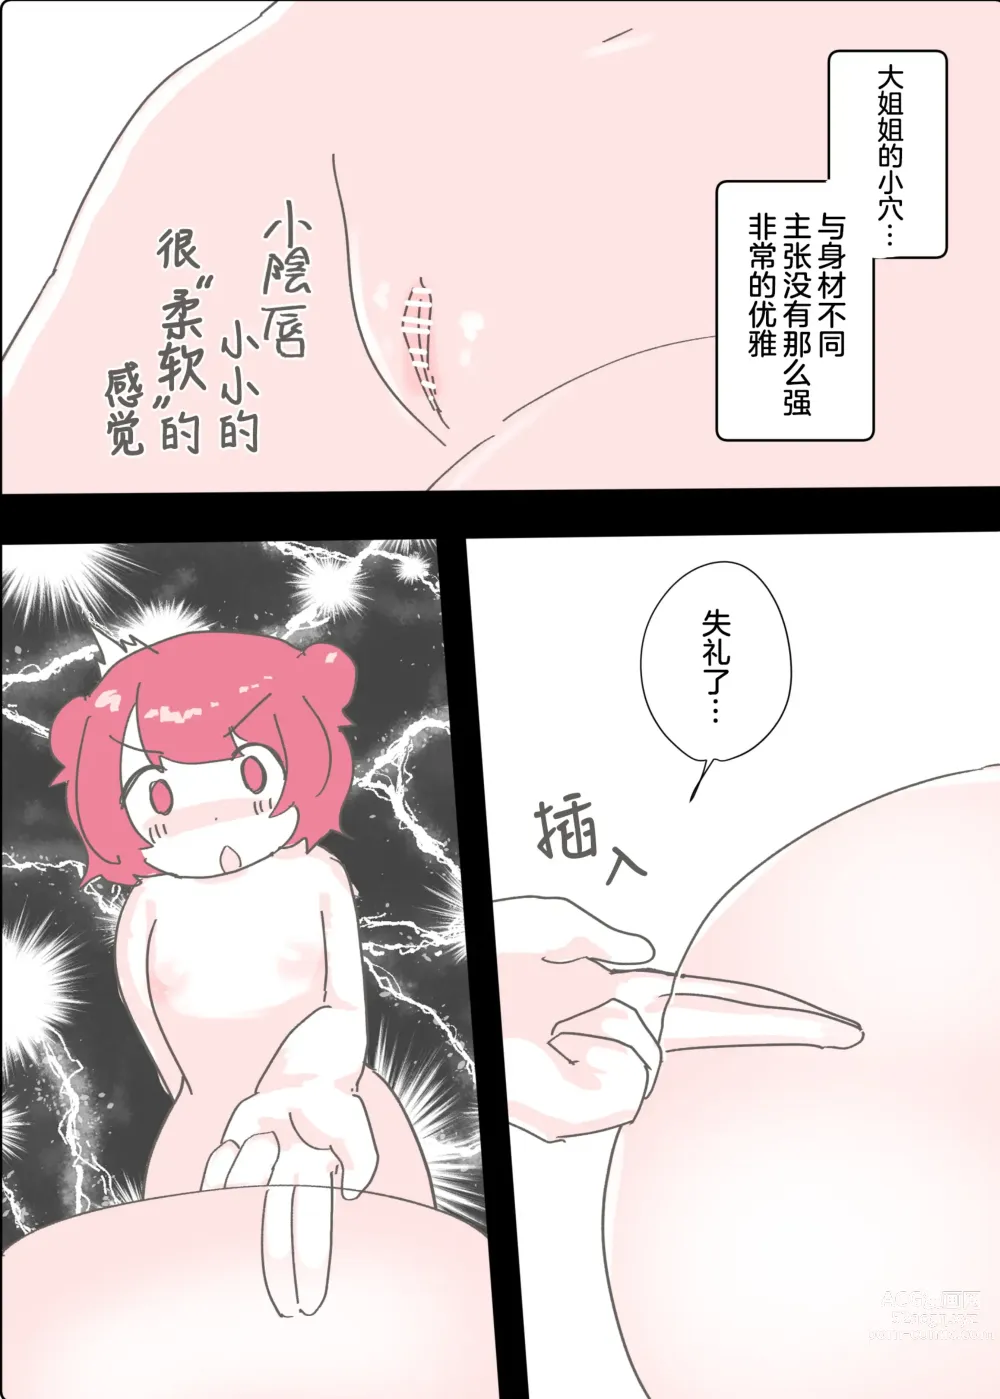 Page 37 of doujinshi 变态百合前辈售出1000份纪念百合风俗之行报告